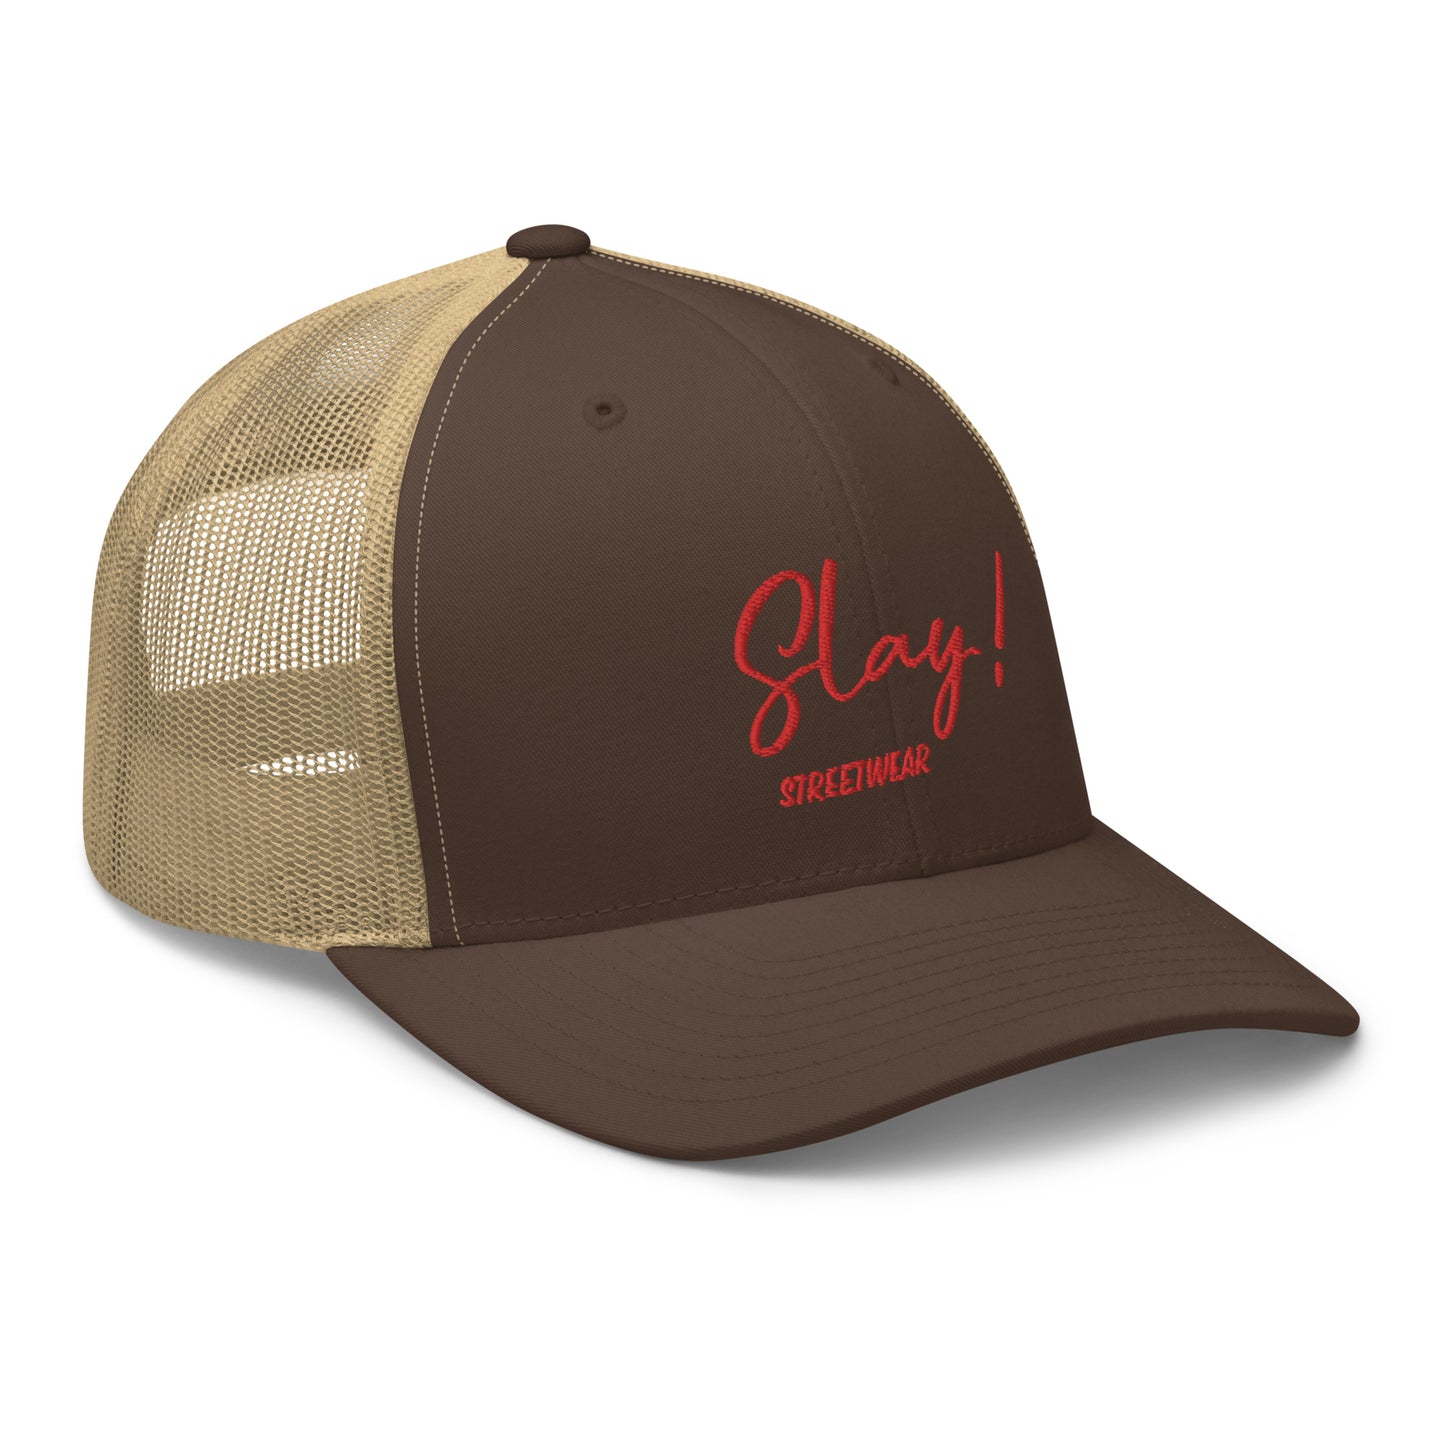 "Slay" trucker cap